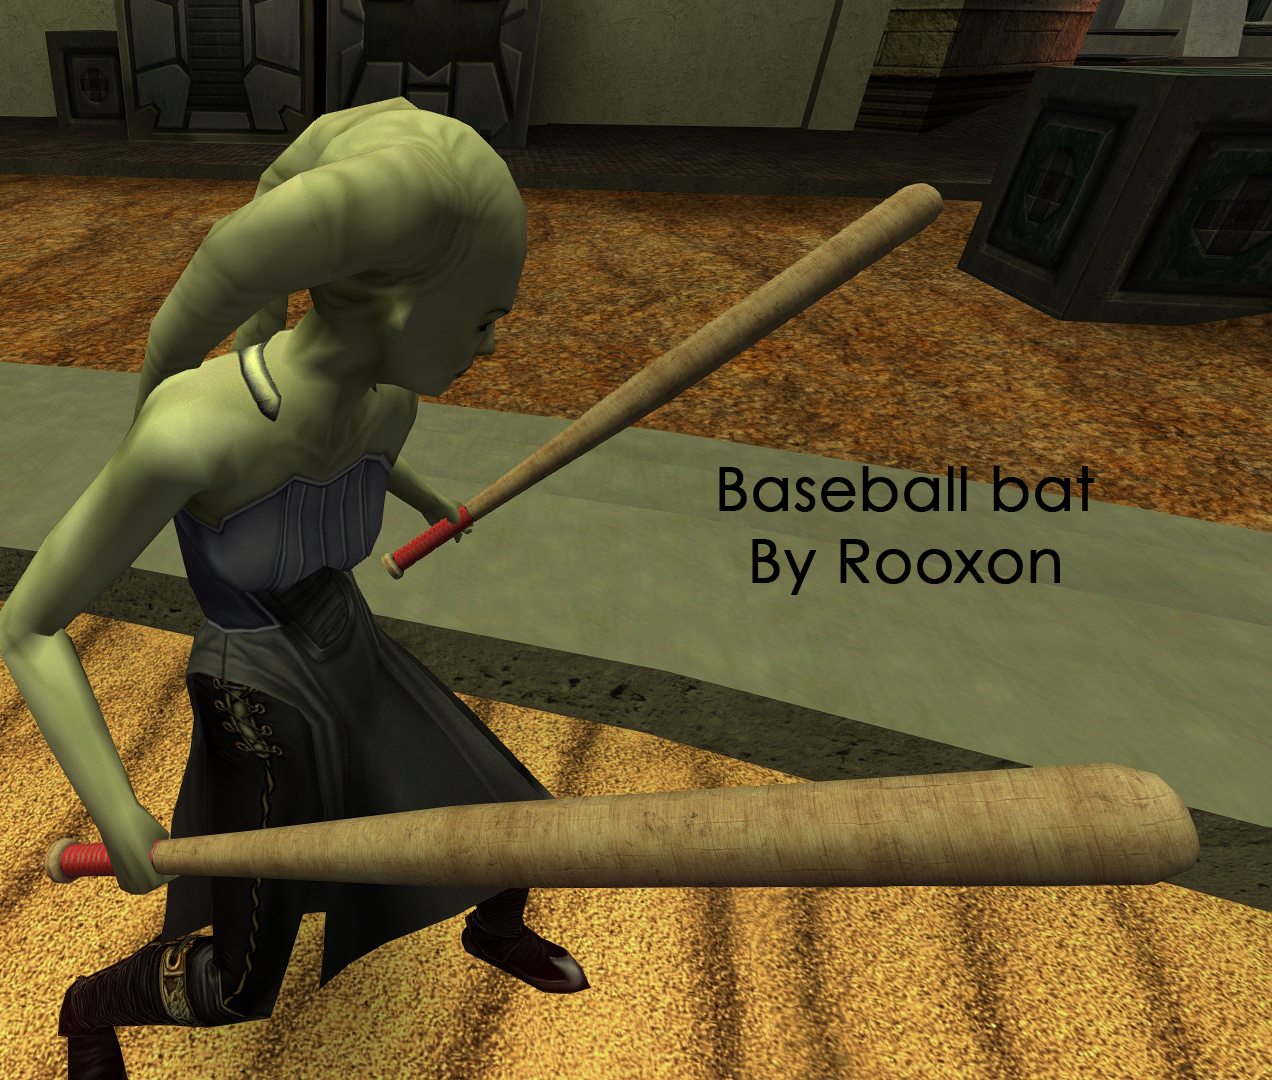 More information about "Baseball Bat (MP)"